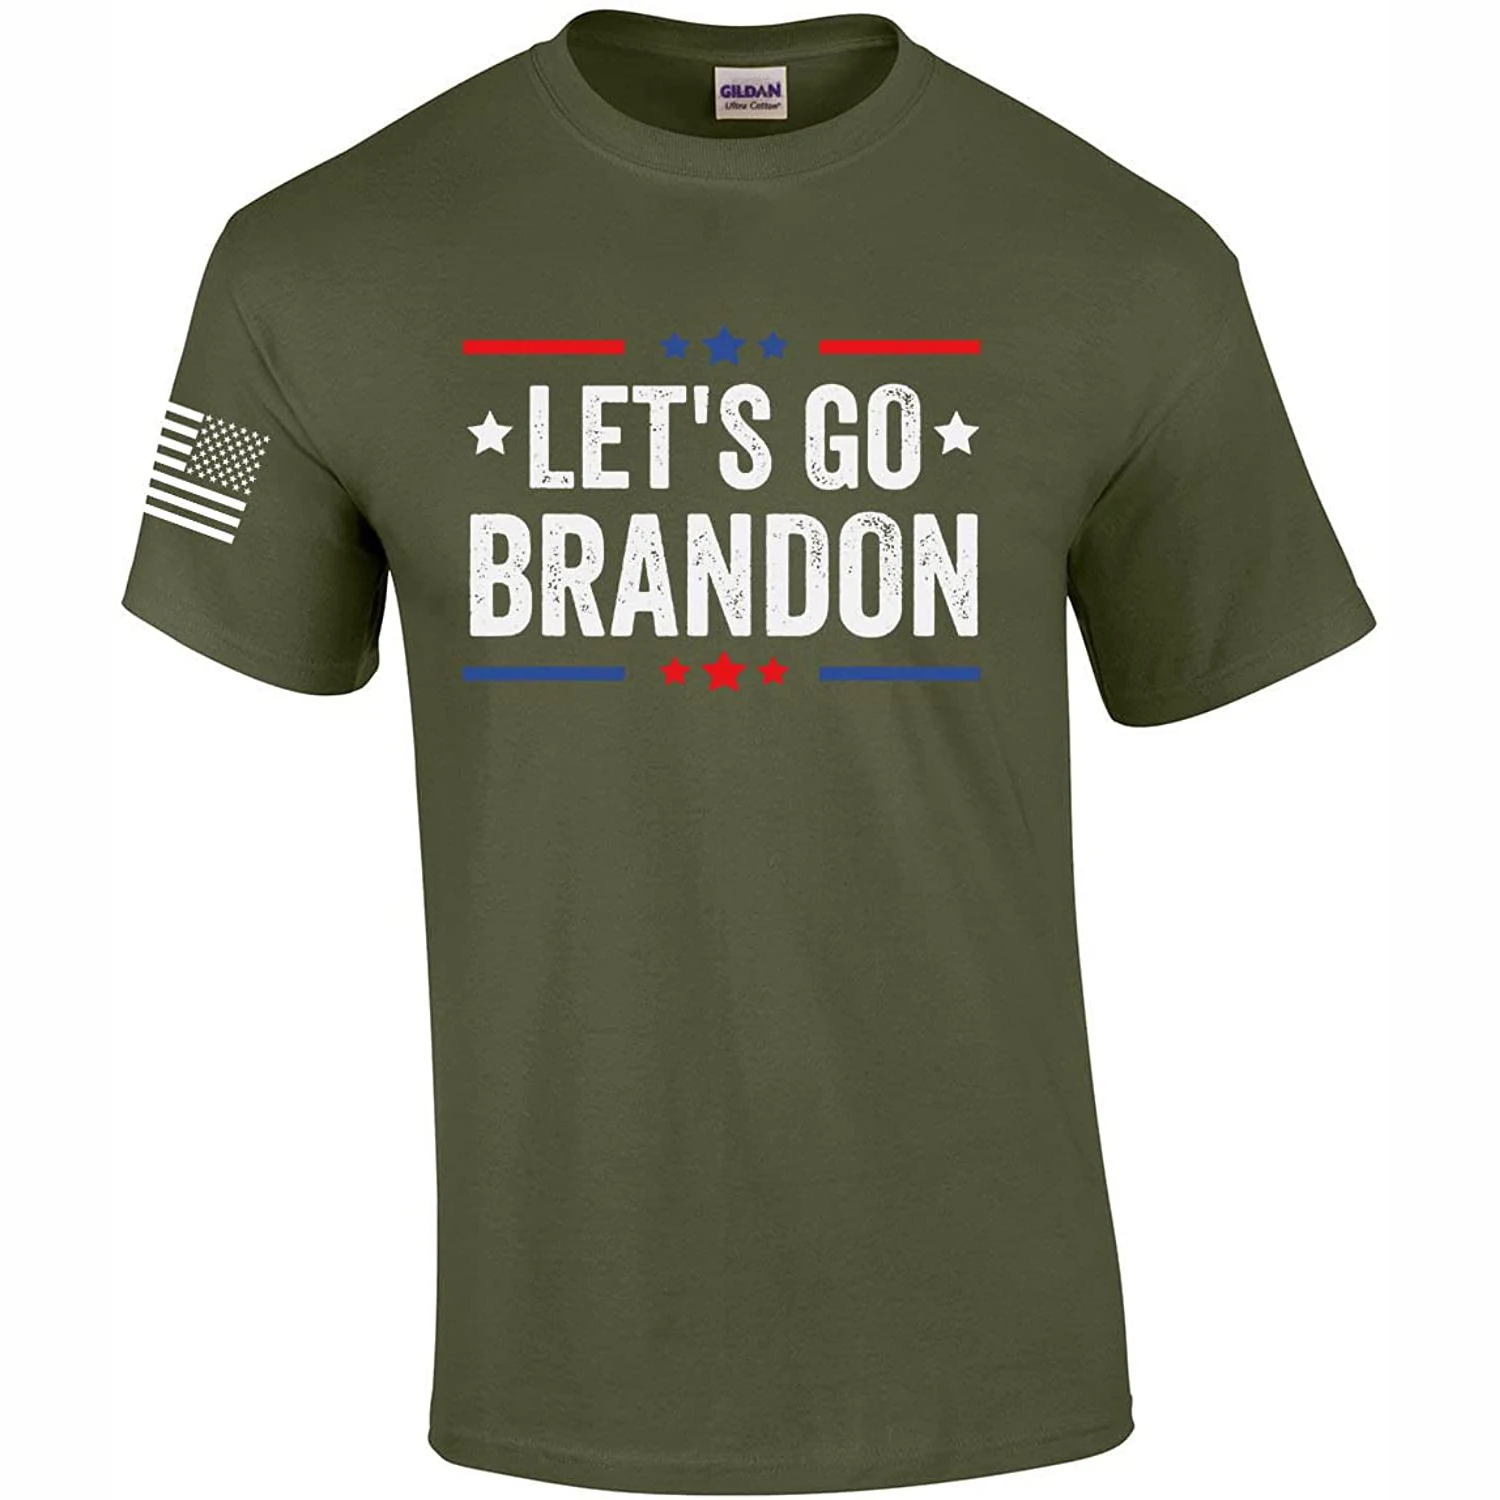 Unisex 100% Cotton Let's Go Brandon Patriotic FJB Funny Political